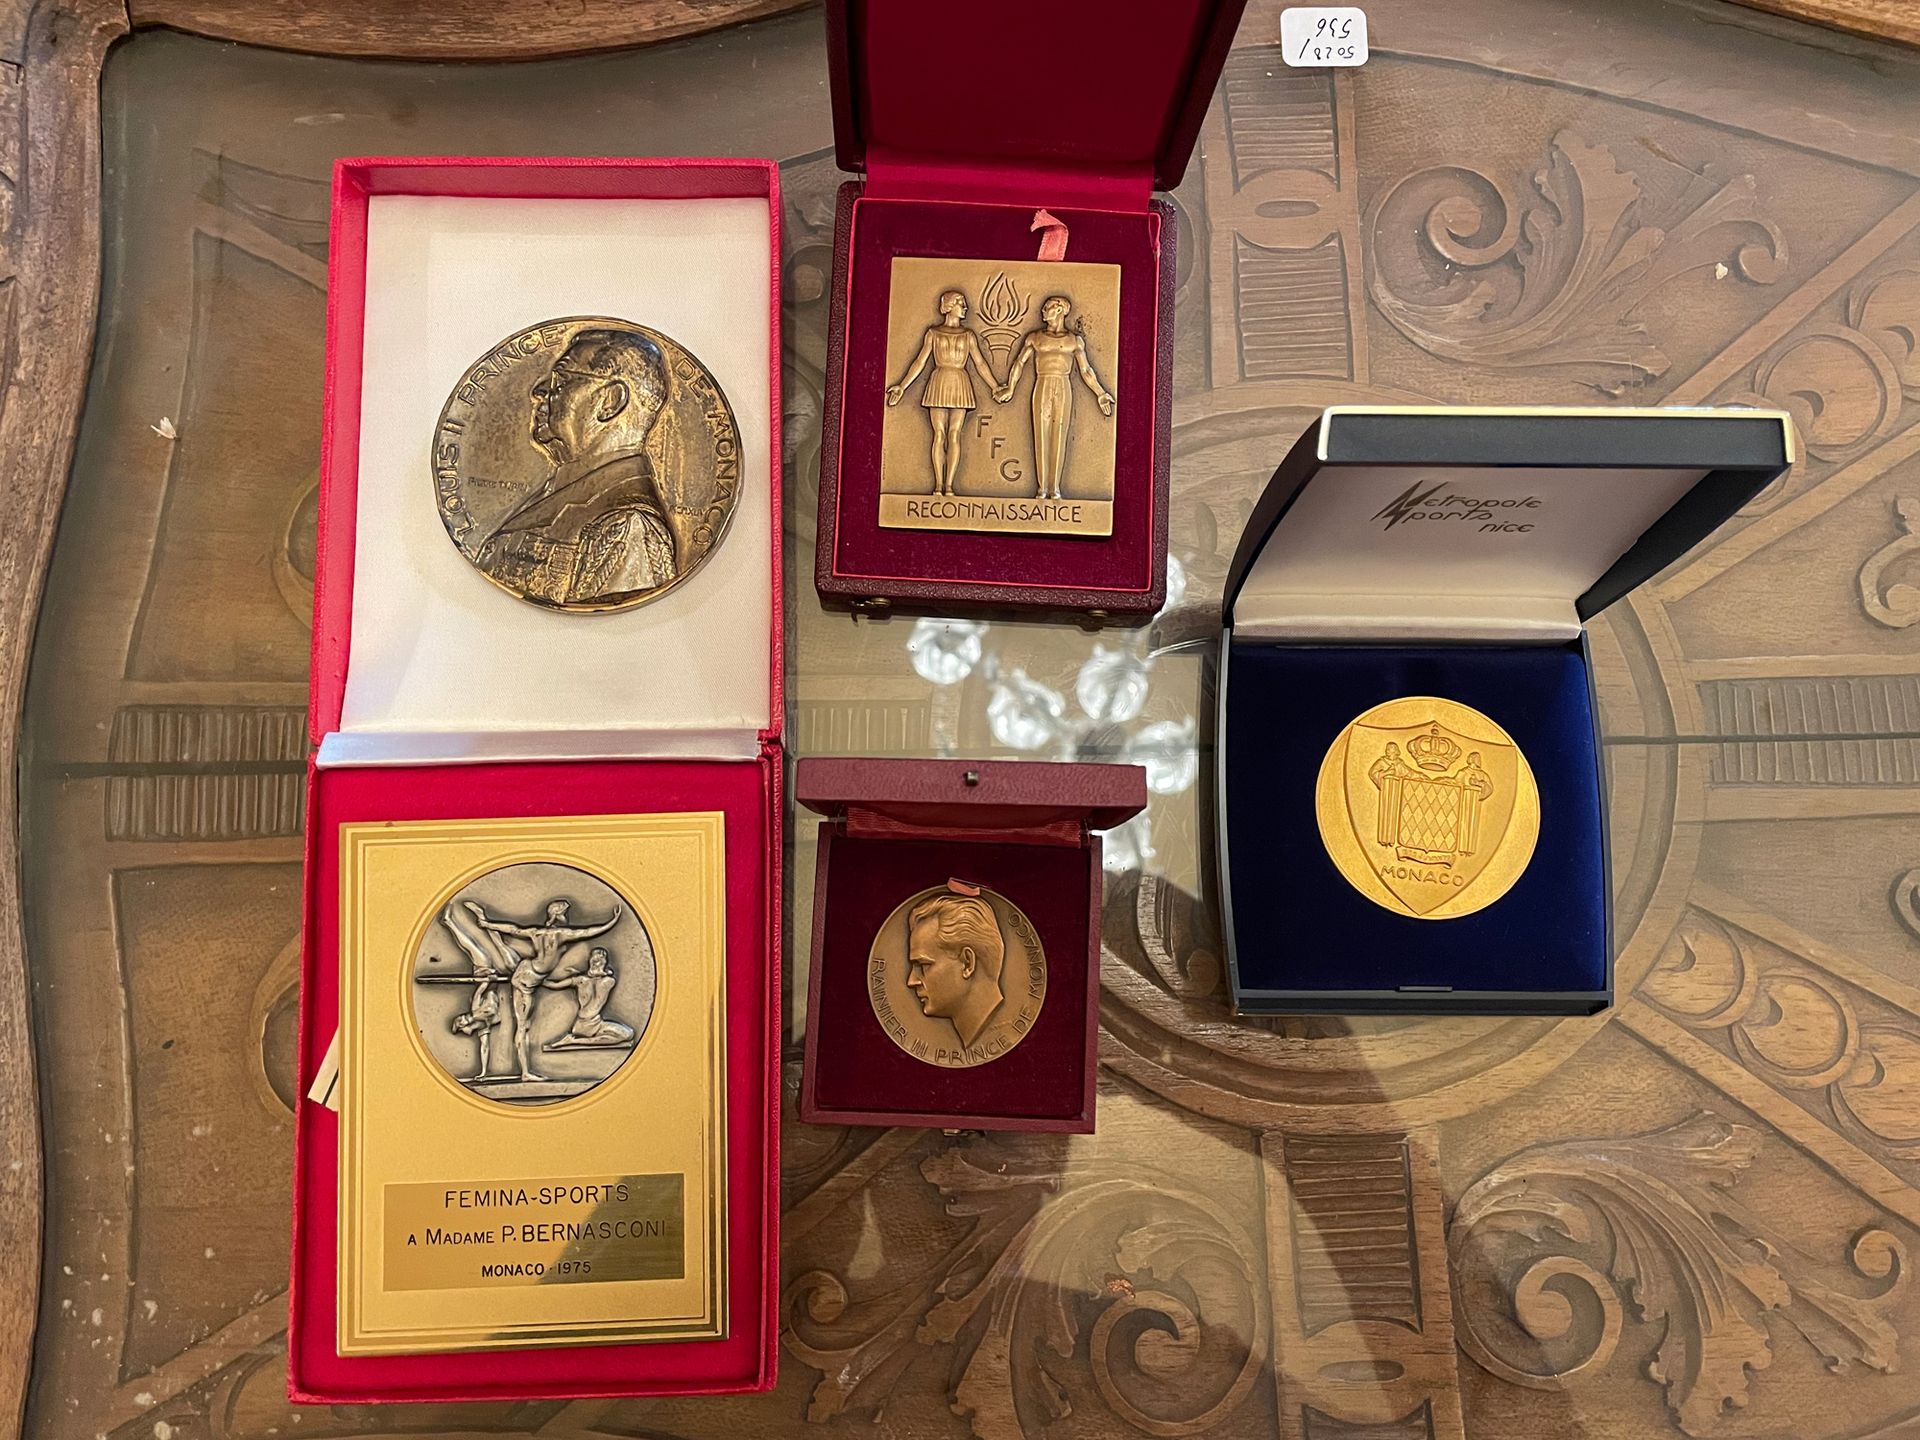 Null 一套五枚奖牌和奖品
摩纳哥亲王和摩纳哥体育赛事的头像